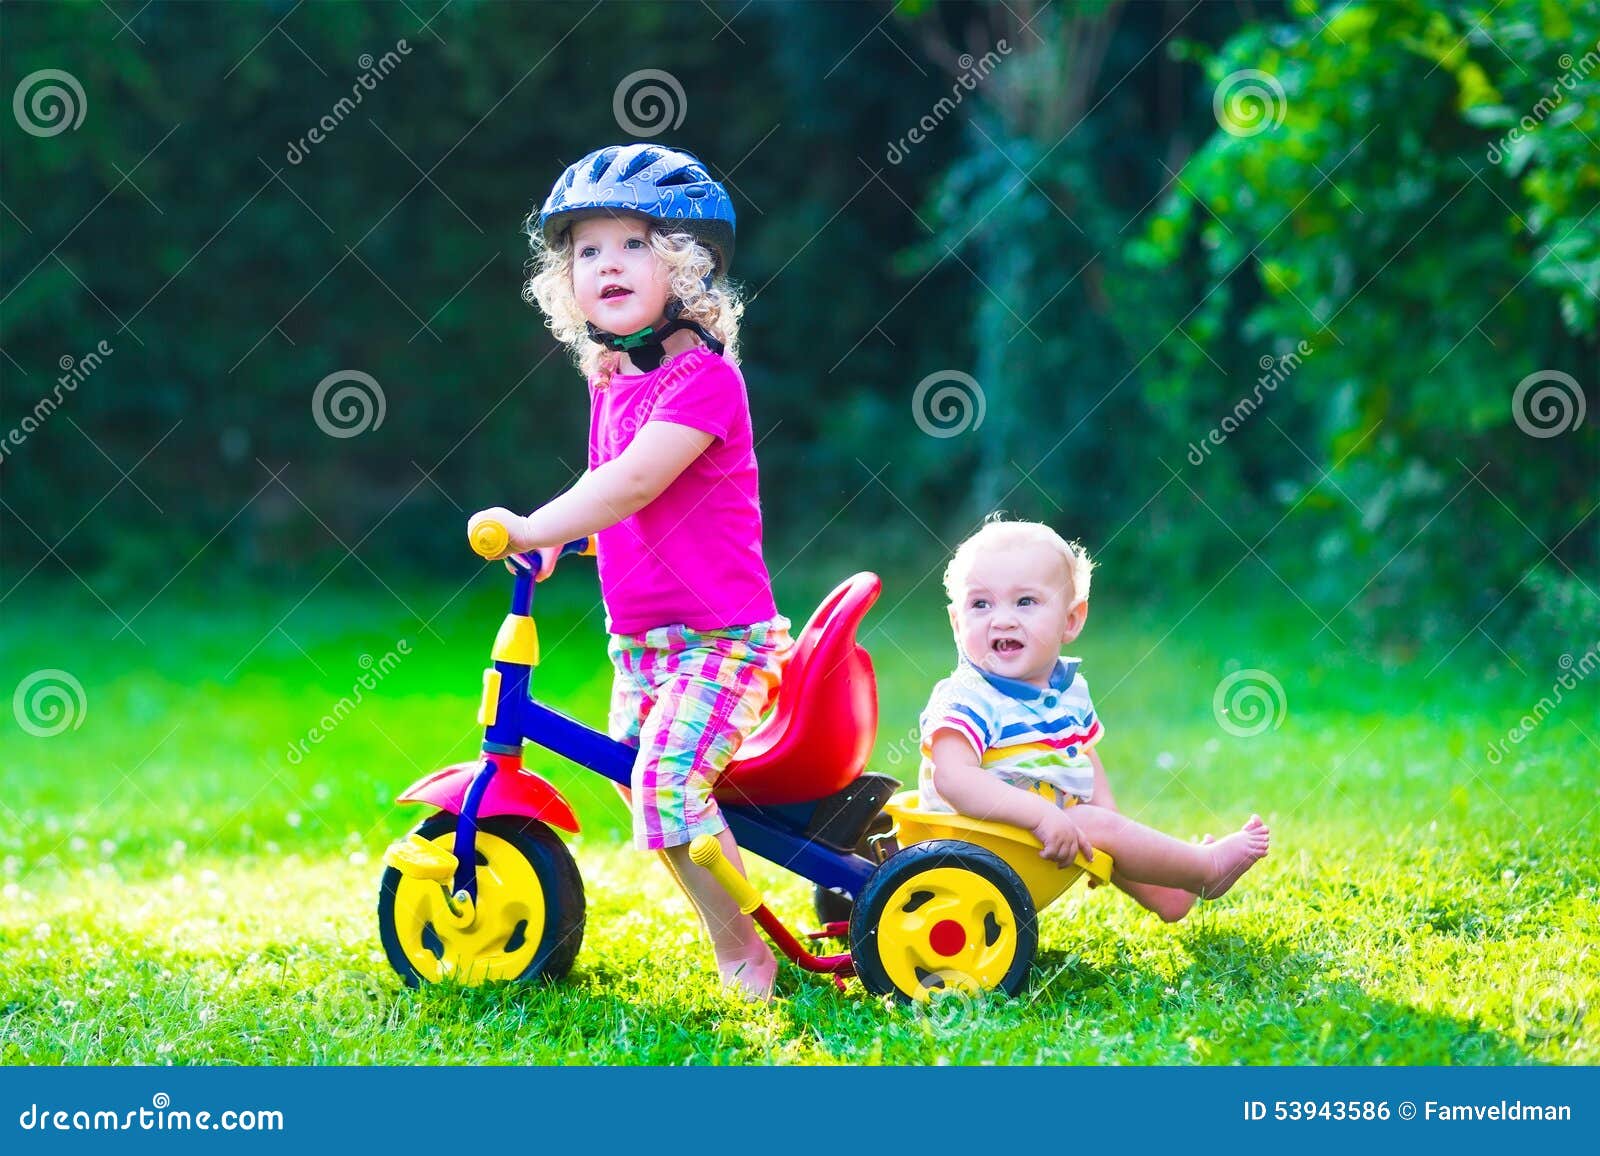 Two Beautiful Kids on a Bike Stock Photo - Image of backyard, girl ...